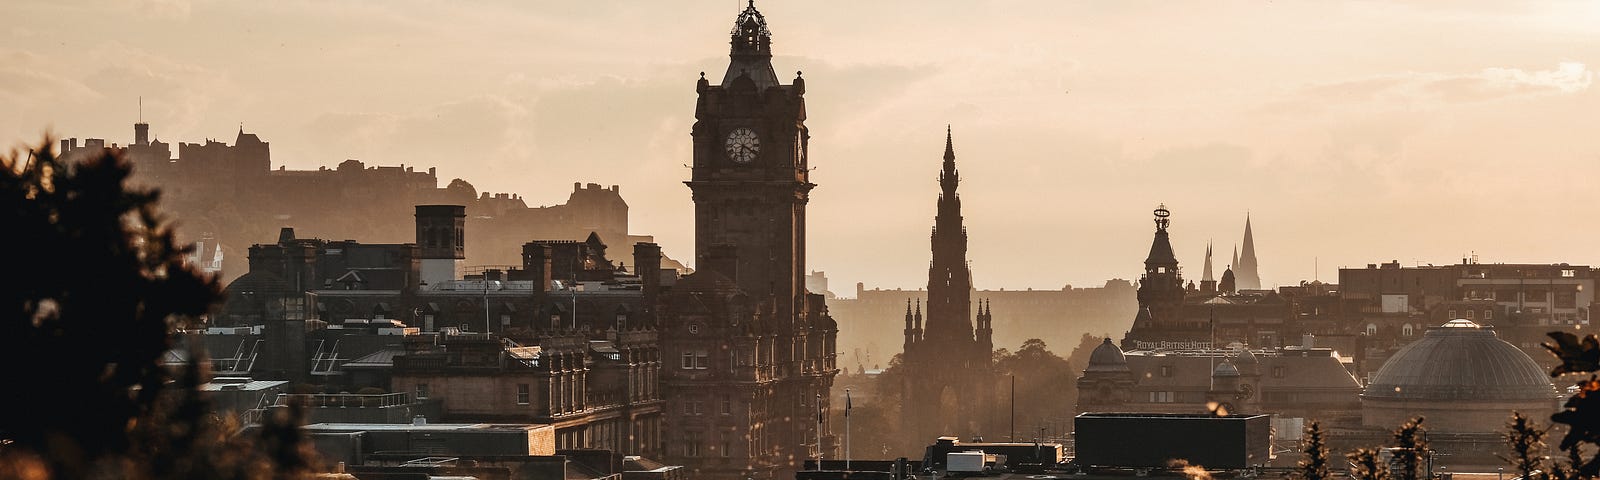 Cityscape of Edinburgh’s skyline